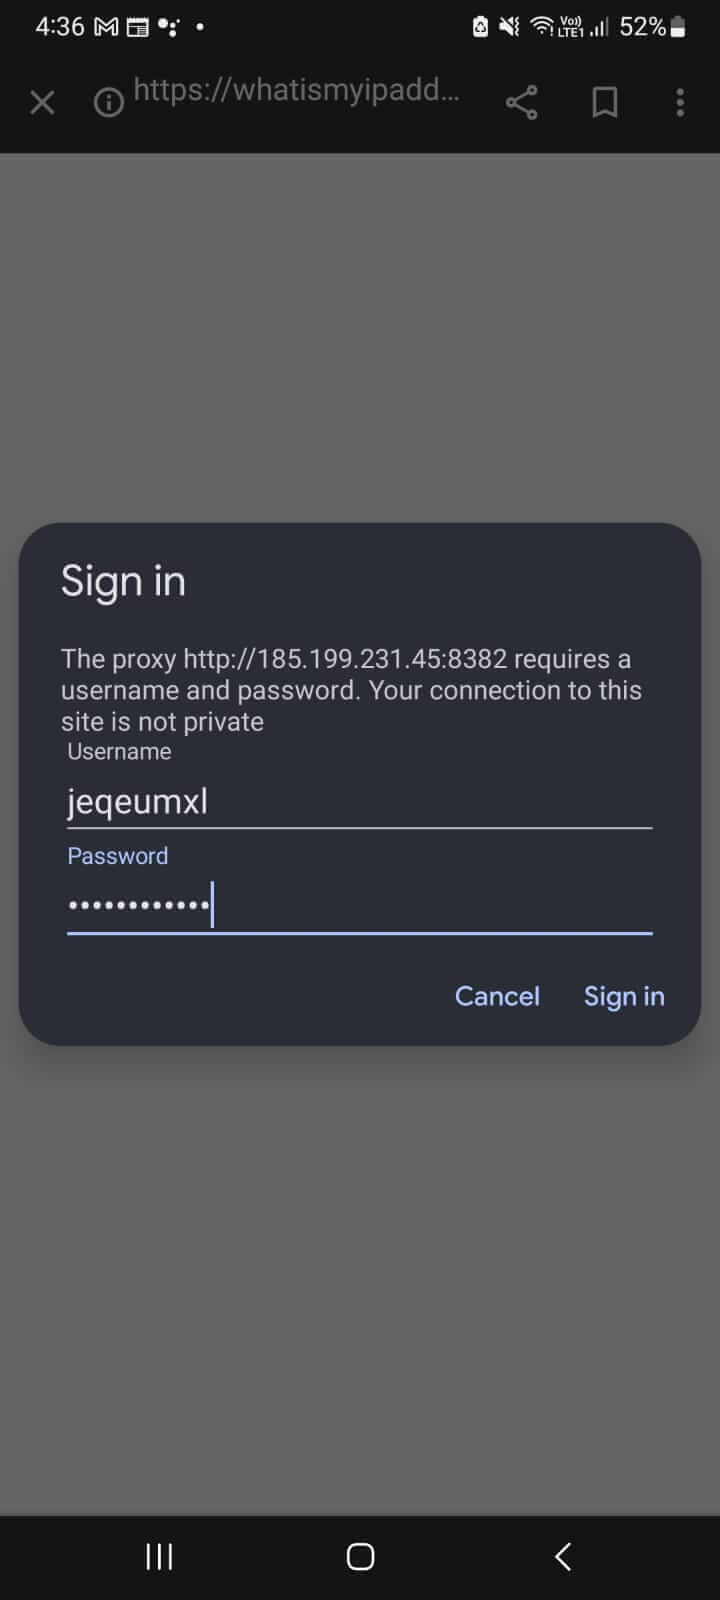 Username & Password Confirmation